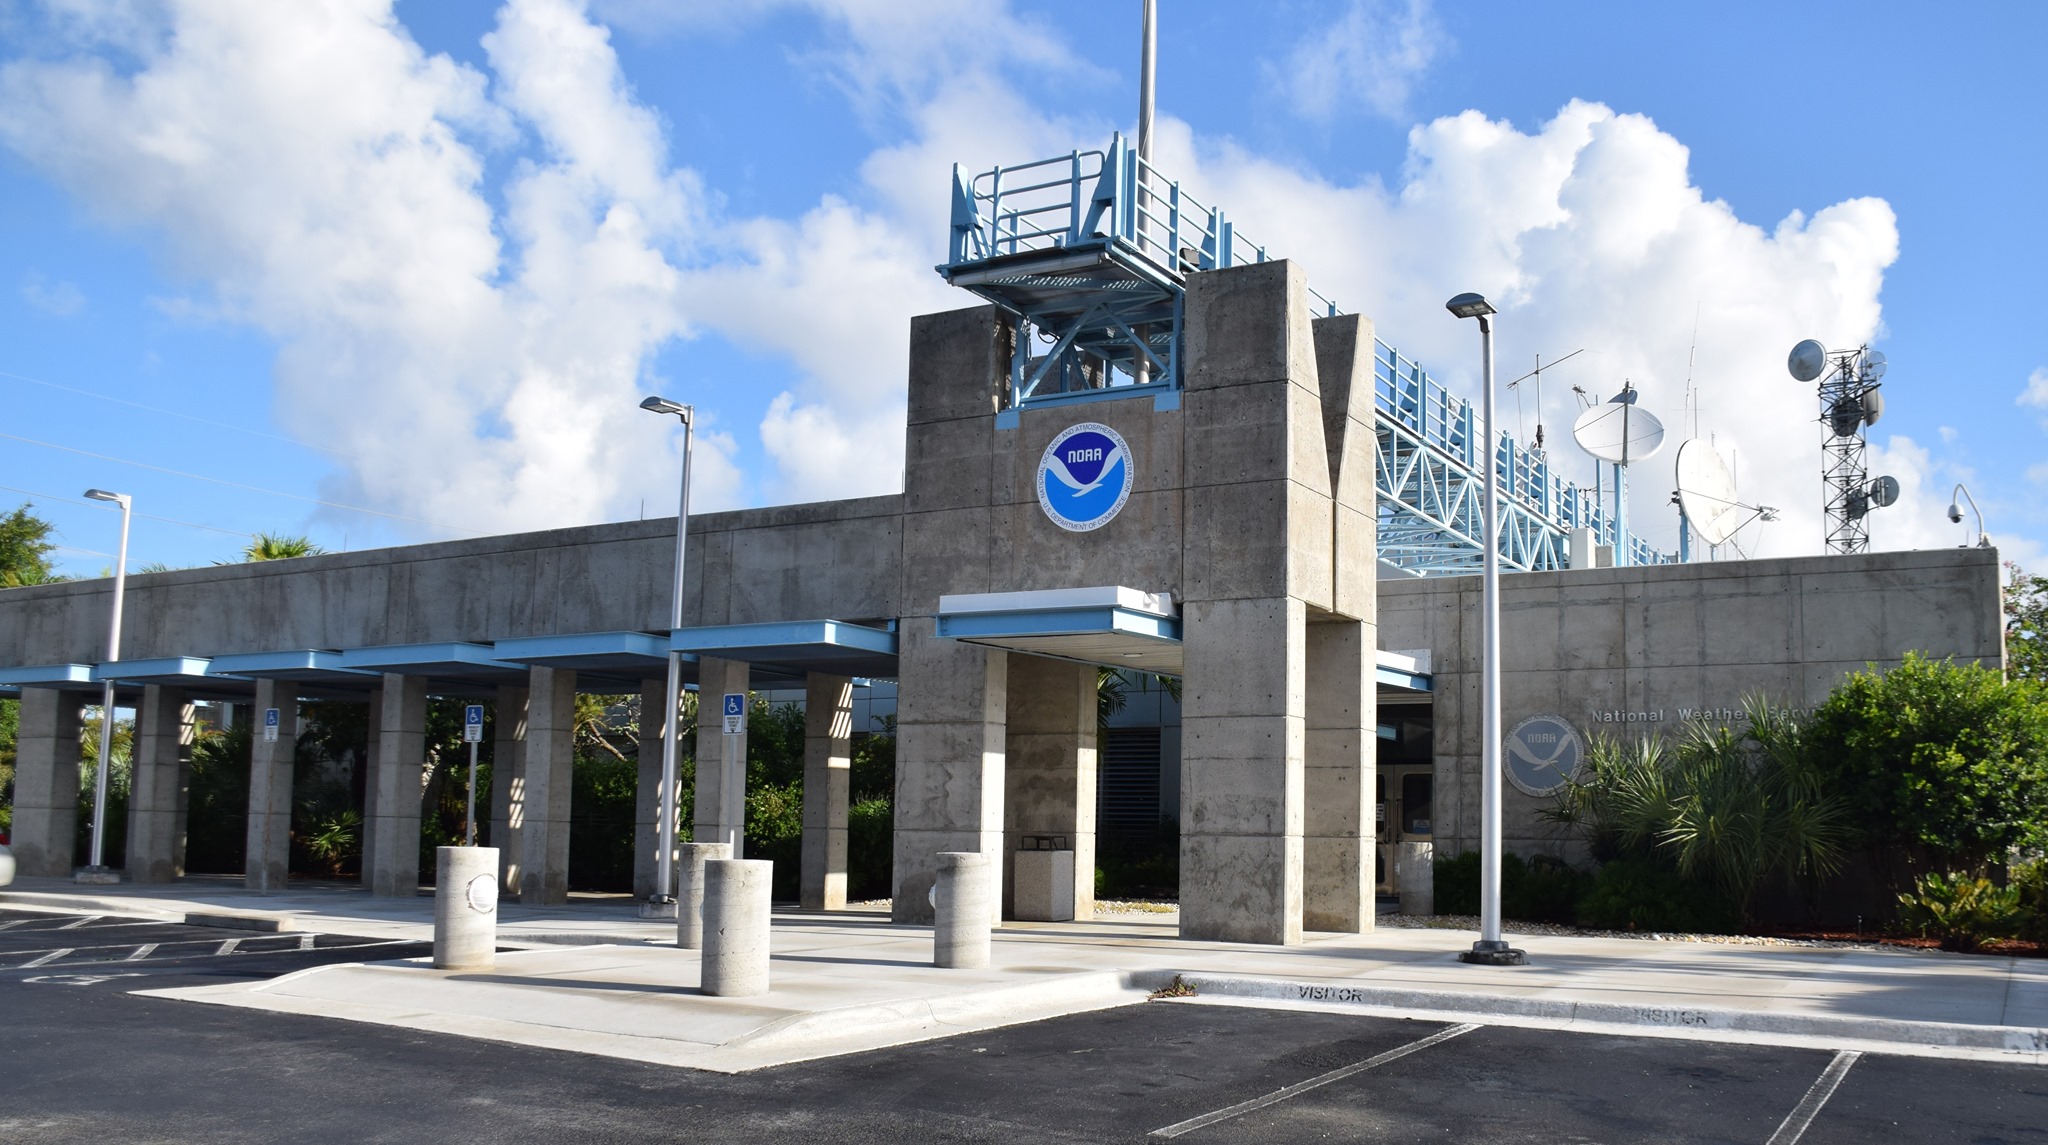 The National Hurricane Center in Miami, Florida.